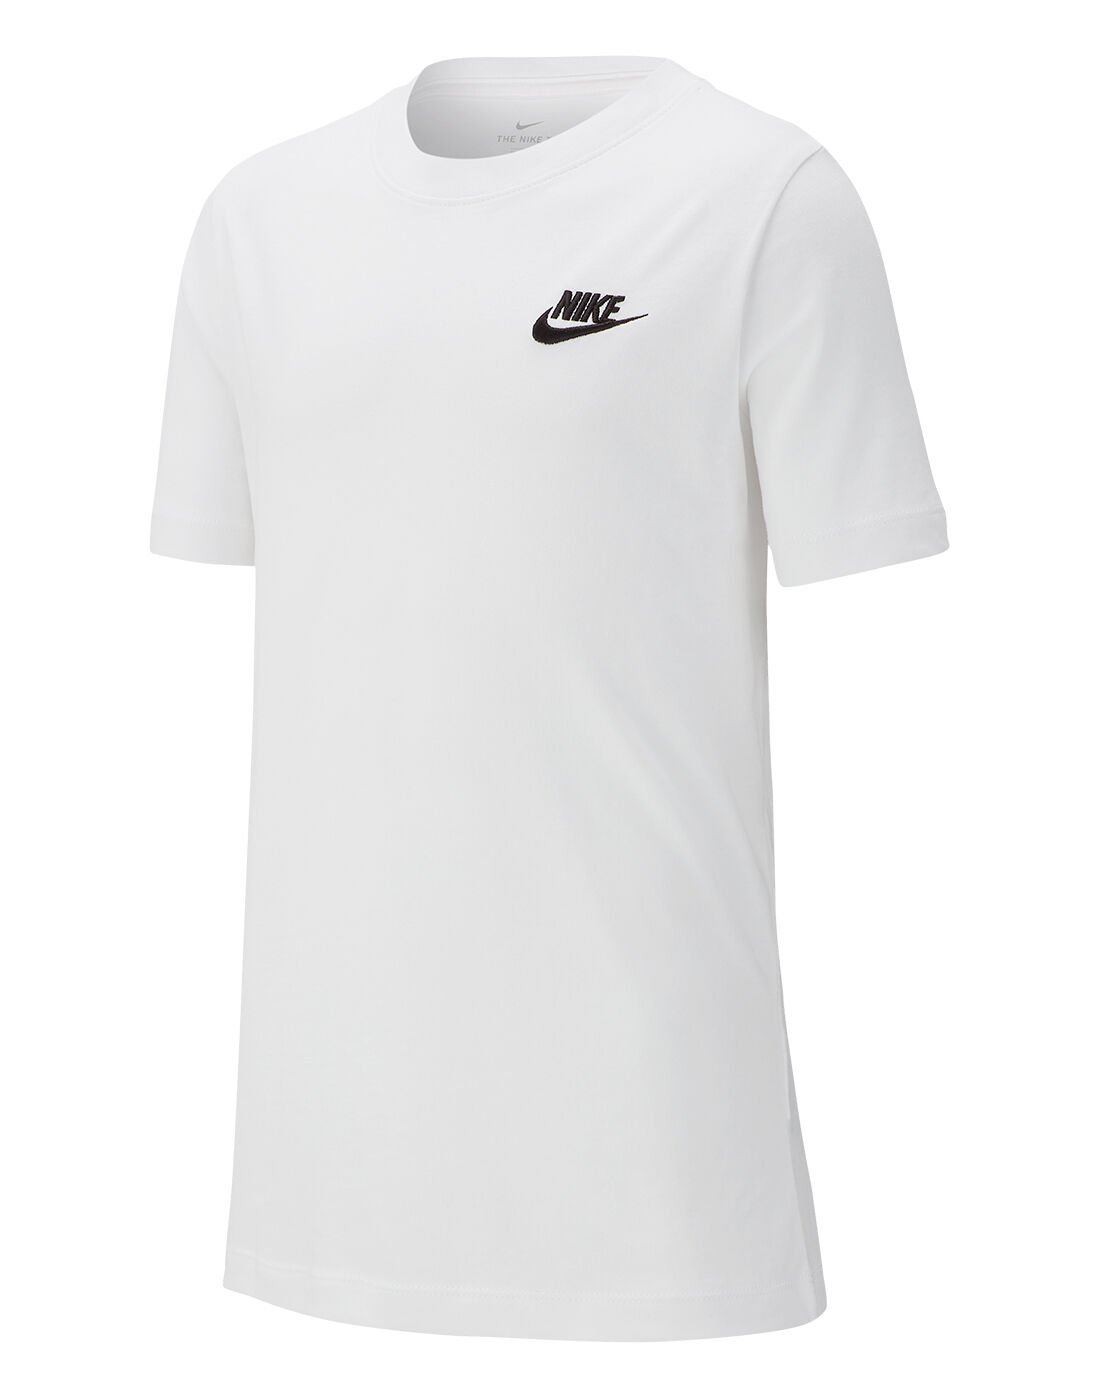 Boy's Plain White Nike T-Shirt | Life 